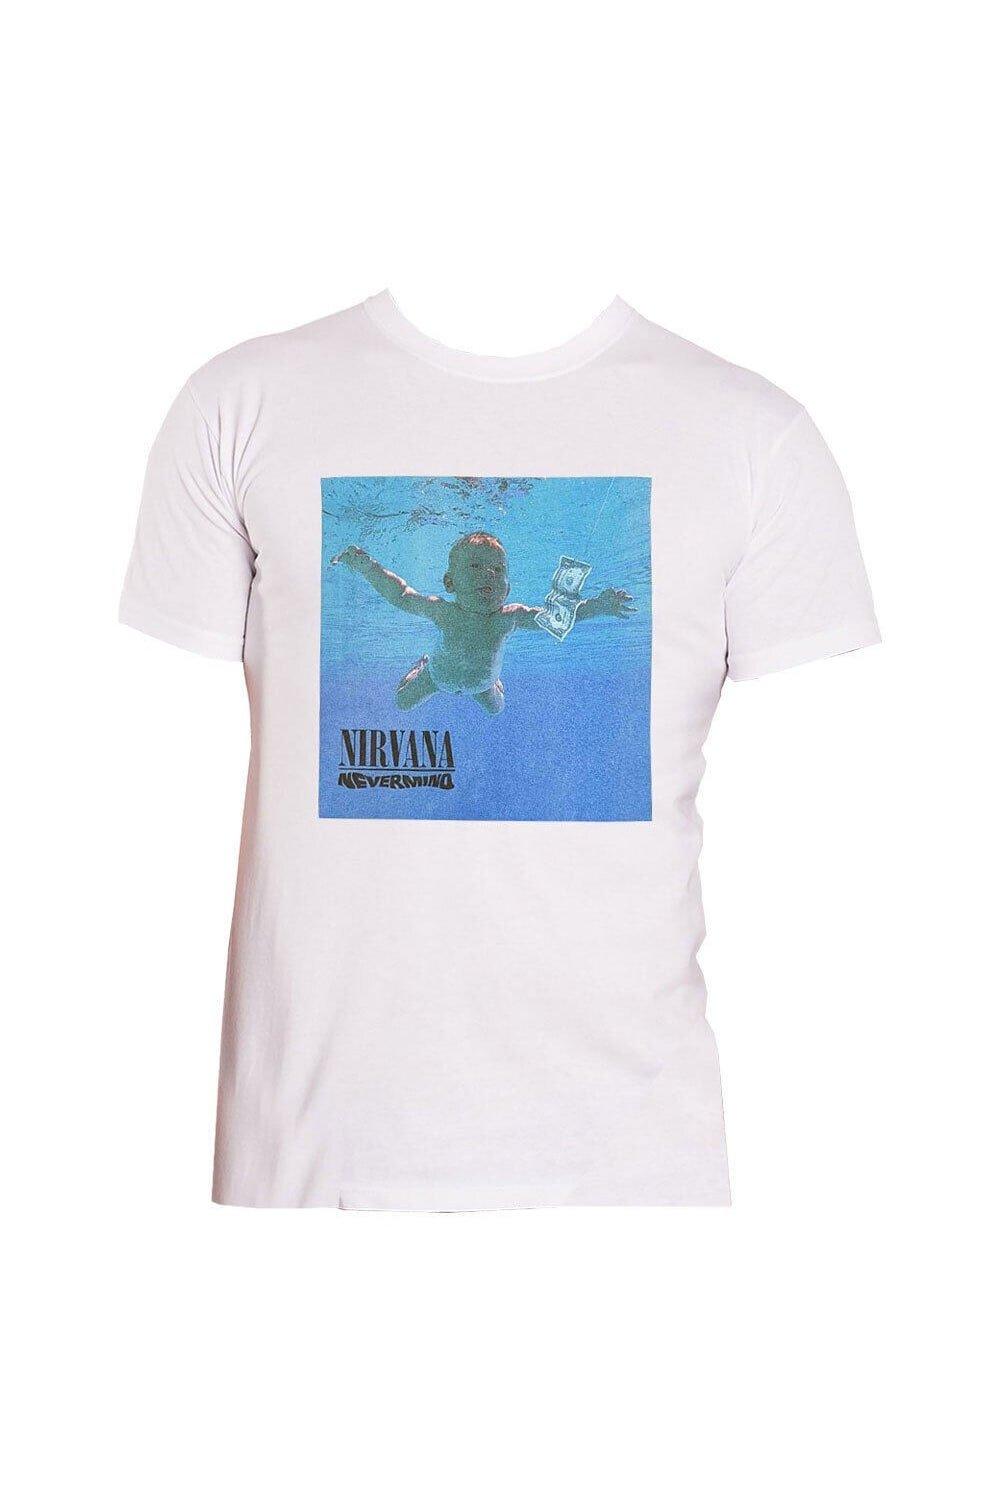 Хлопковая футболка Nevermind Album Nirvana, белый виниловая пластинка nirvana nevermind 0720642442517